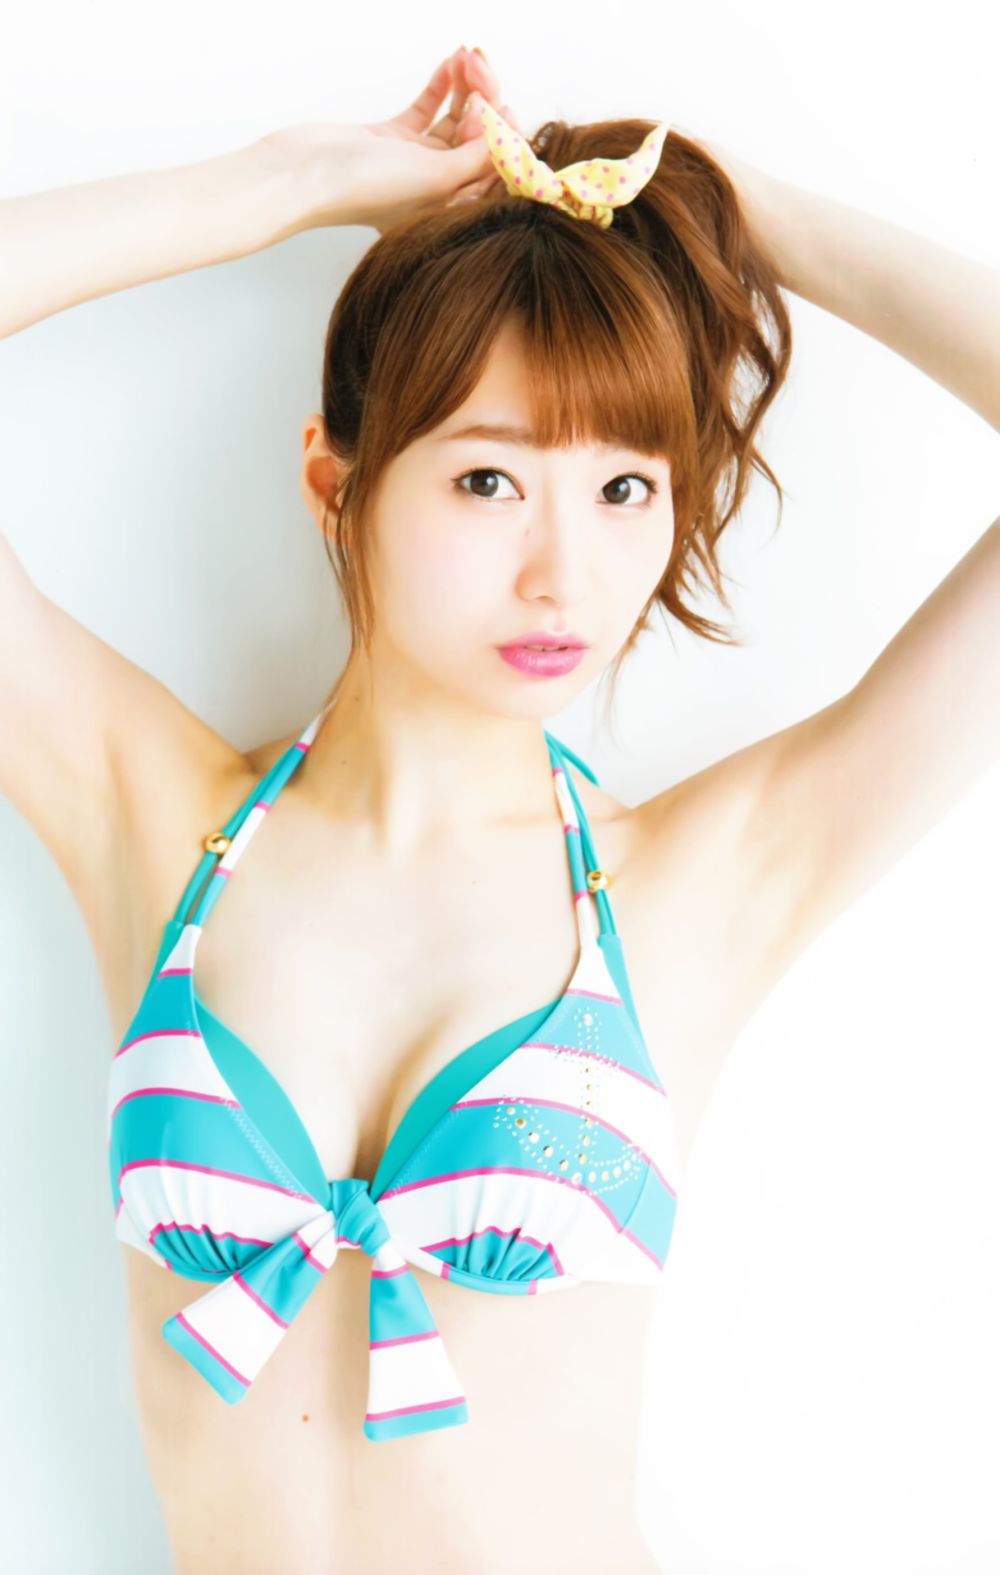 Haruka Tomatsu Sexy and Hottest Photos , Latest Pics